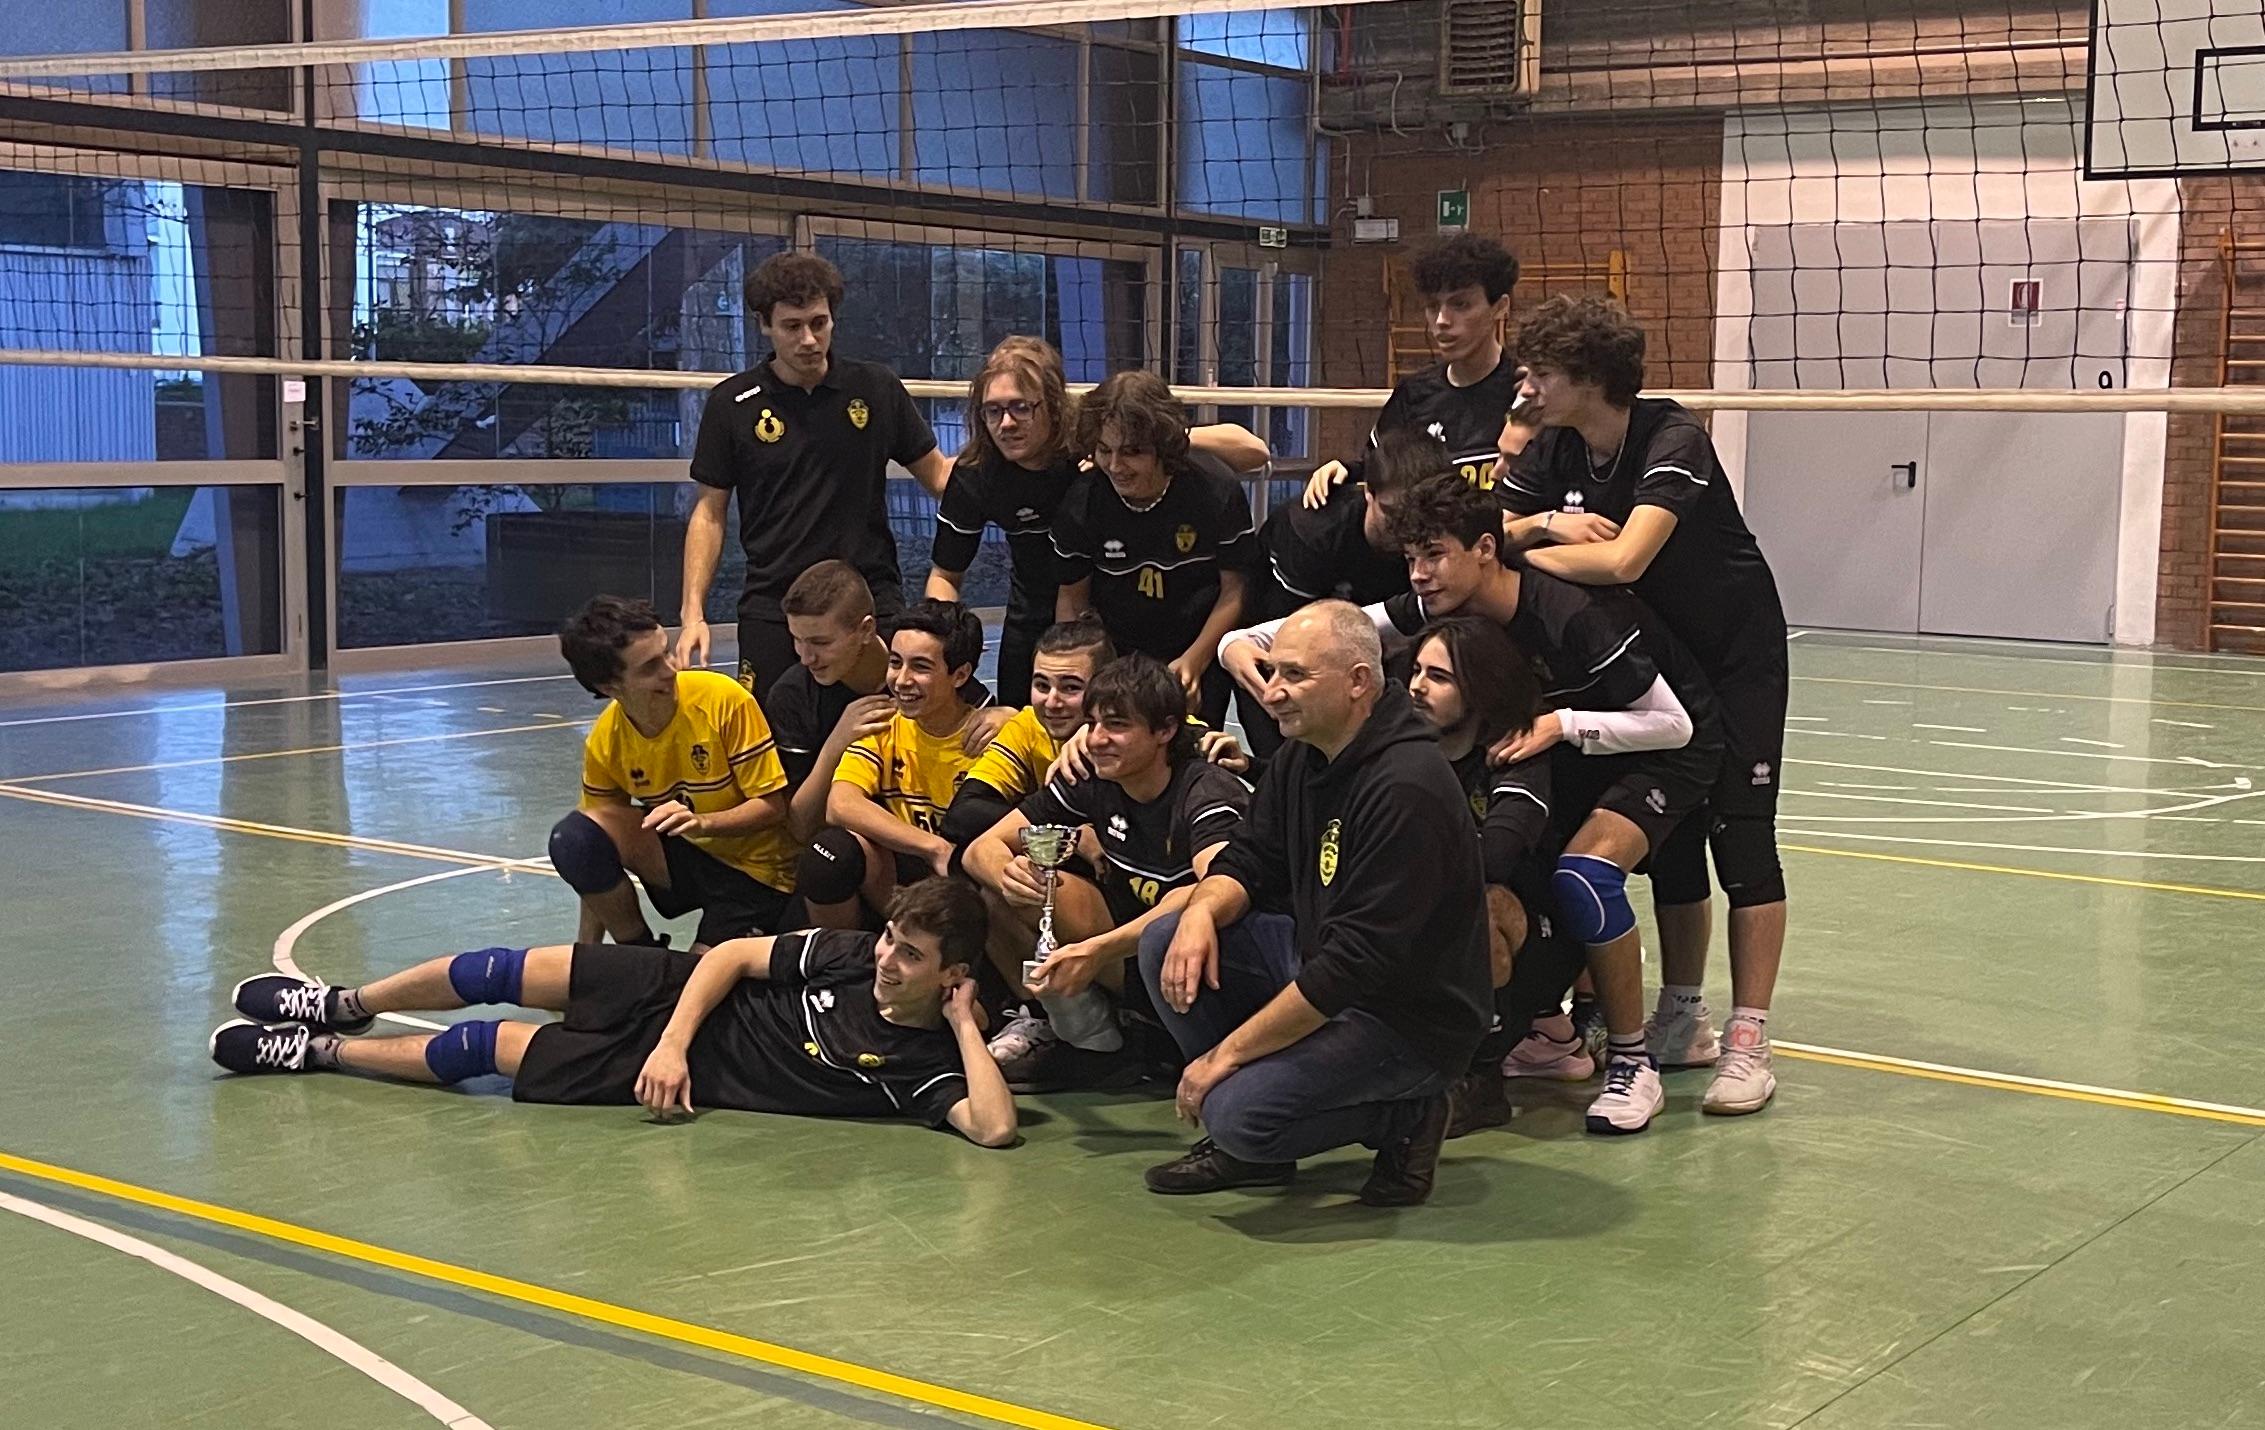 New Volley academy Forlì